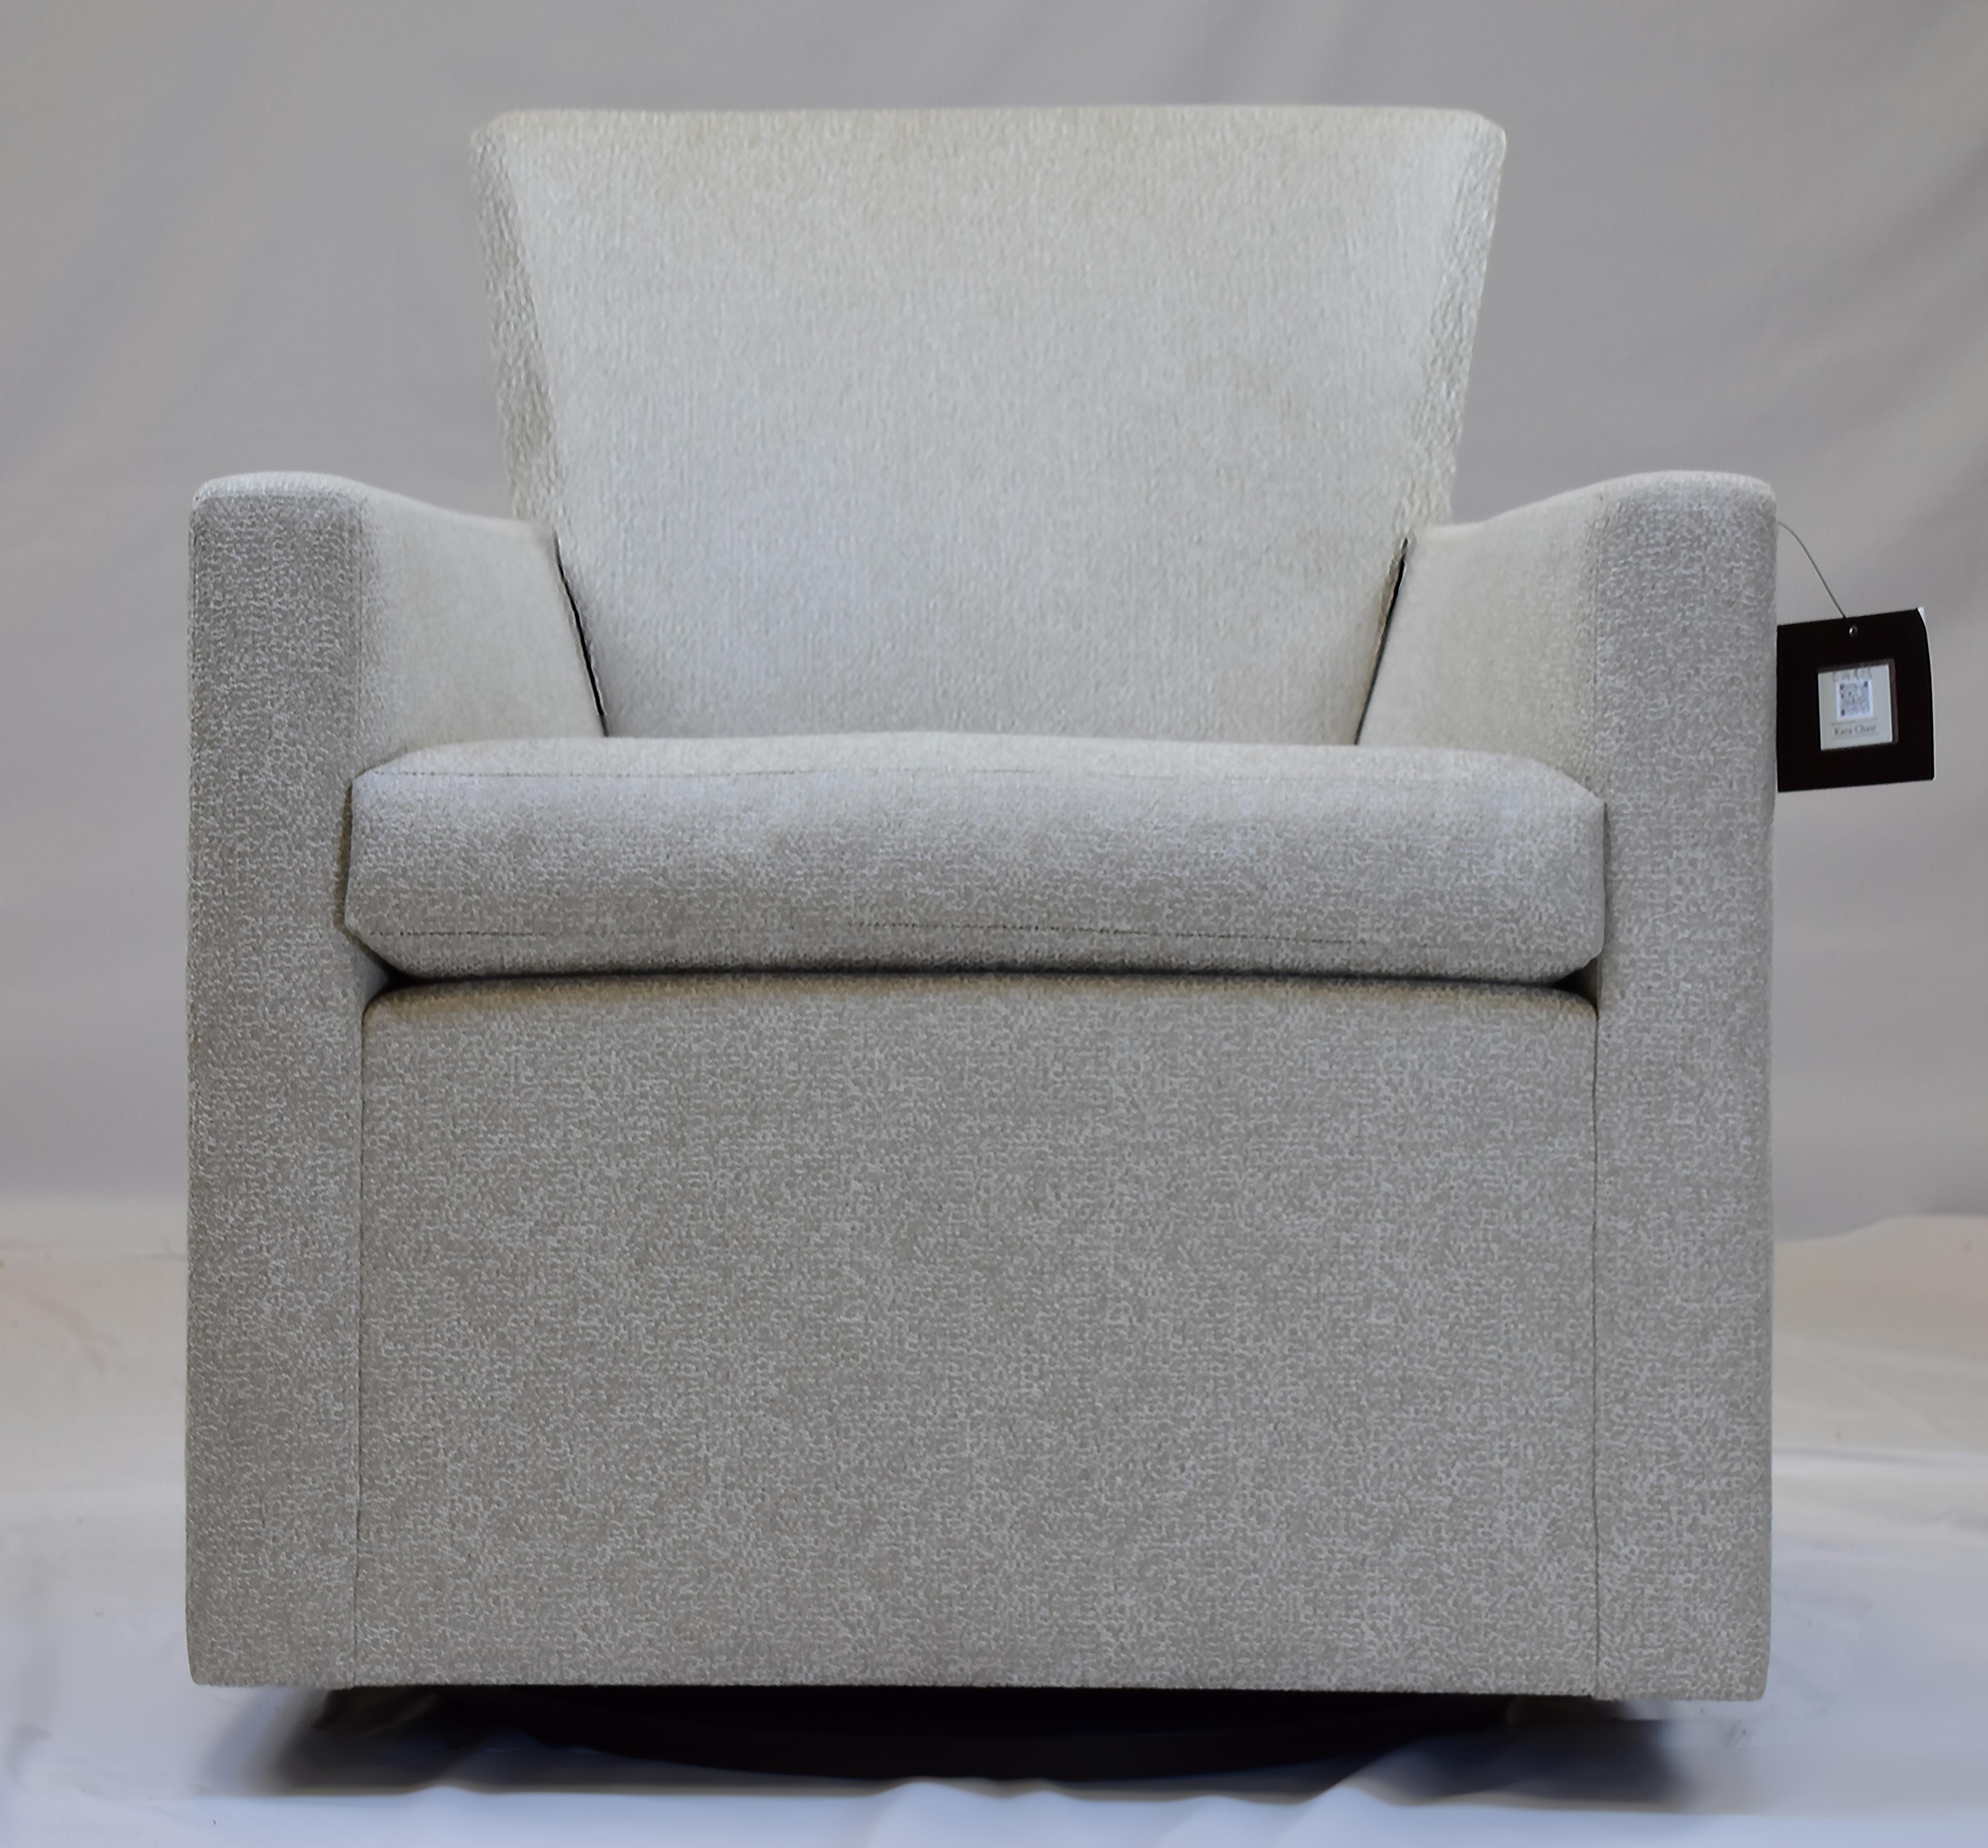 Le Jeune Upholstery Barrel Swivel Kara Chair Showroom Model, 2 Available For Sale 3